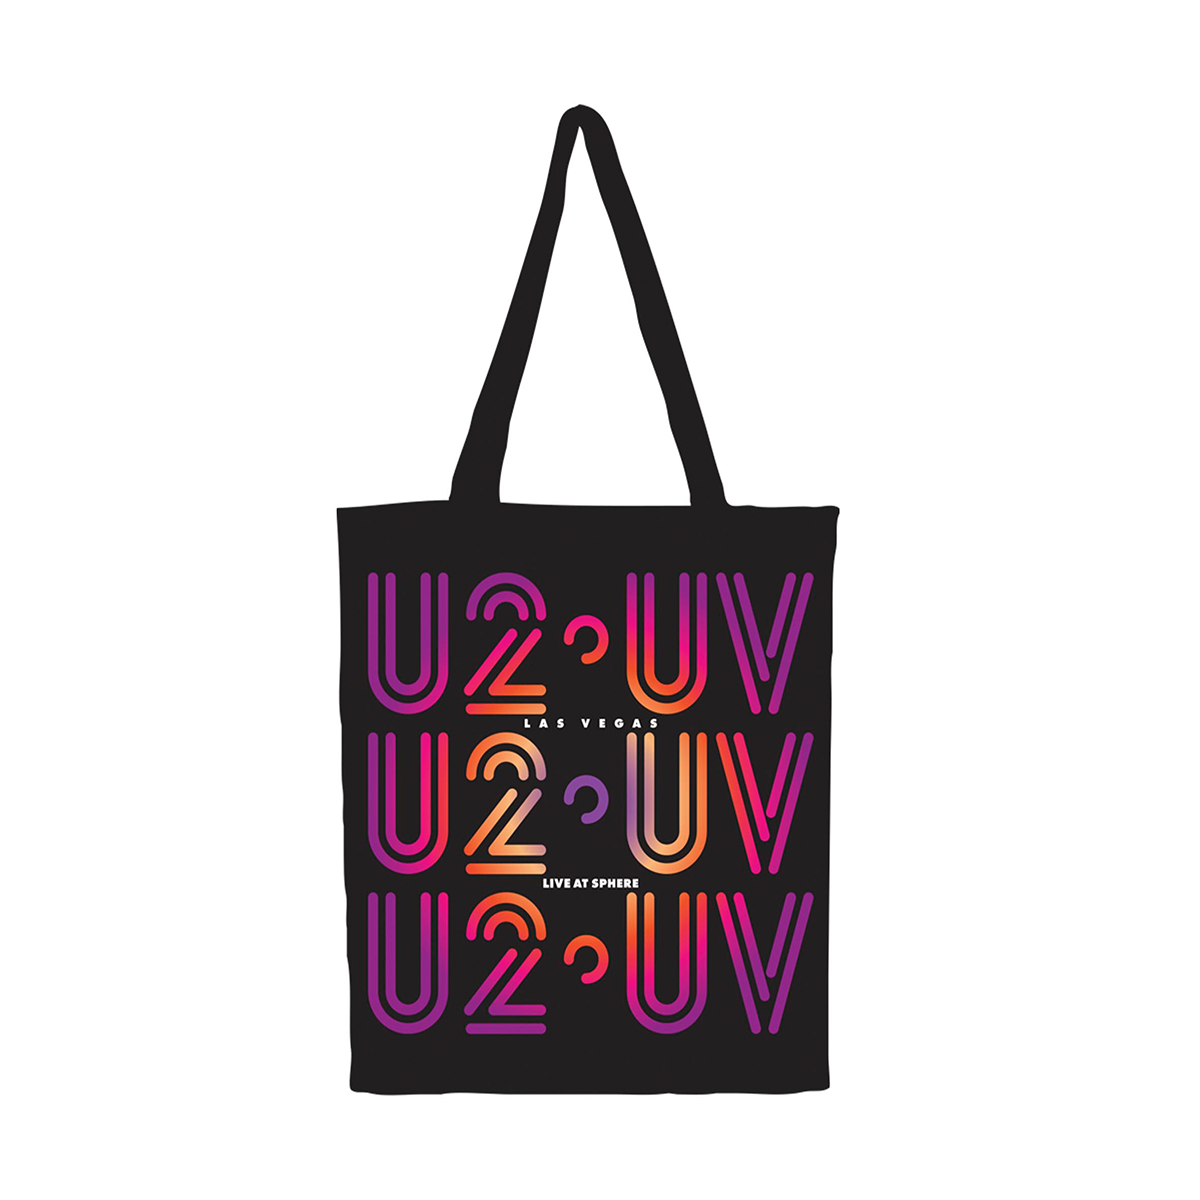 U2 UV LOGO LIVE AT SPHERE TOTE